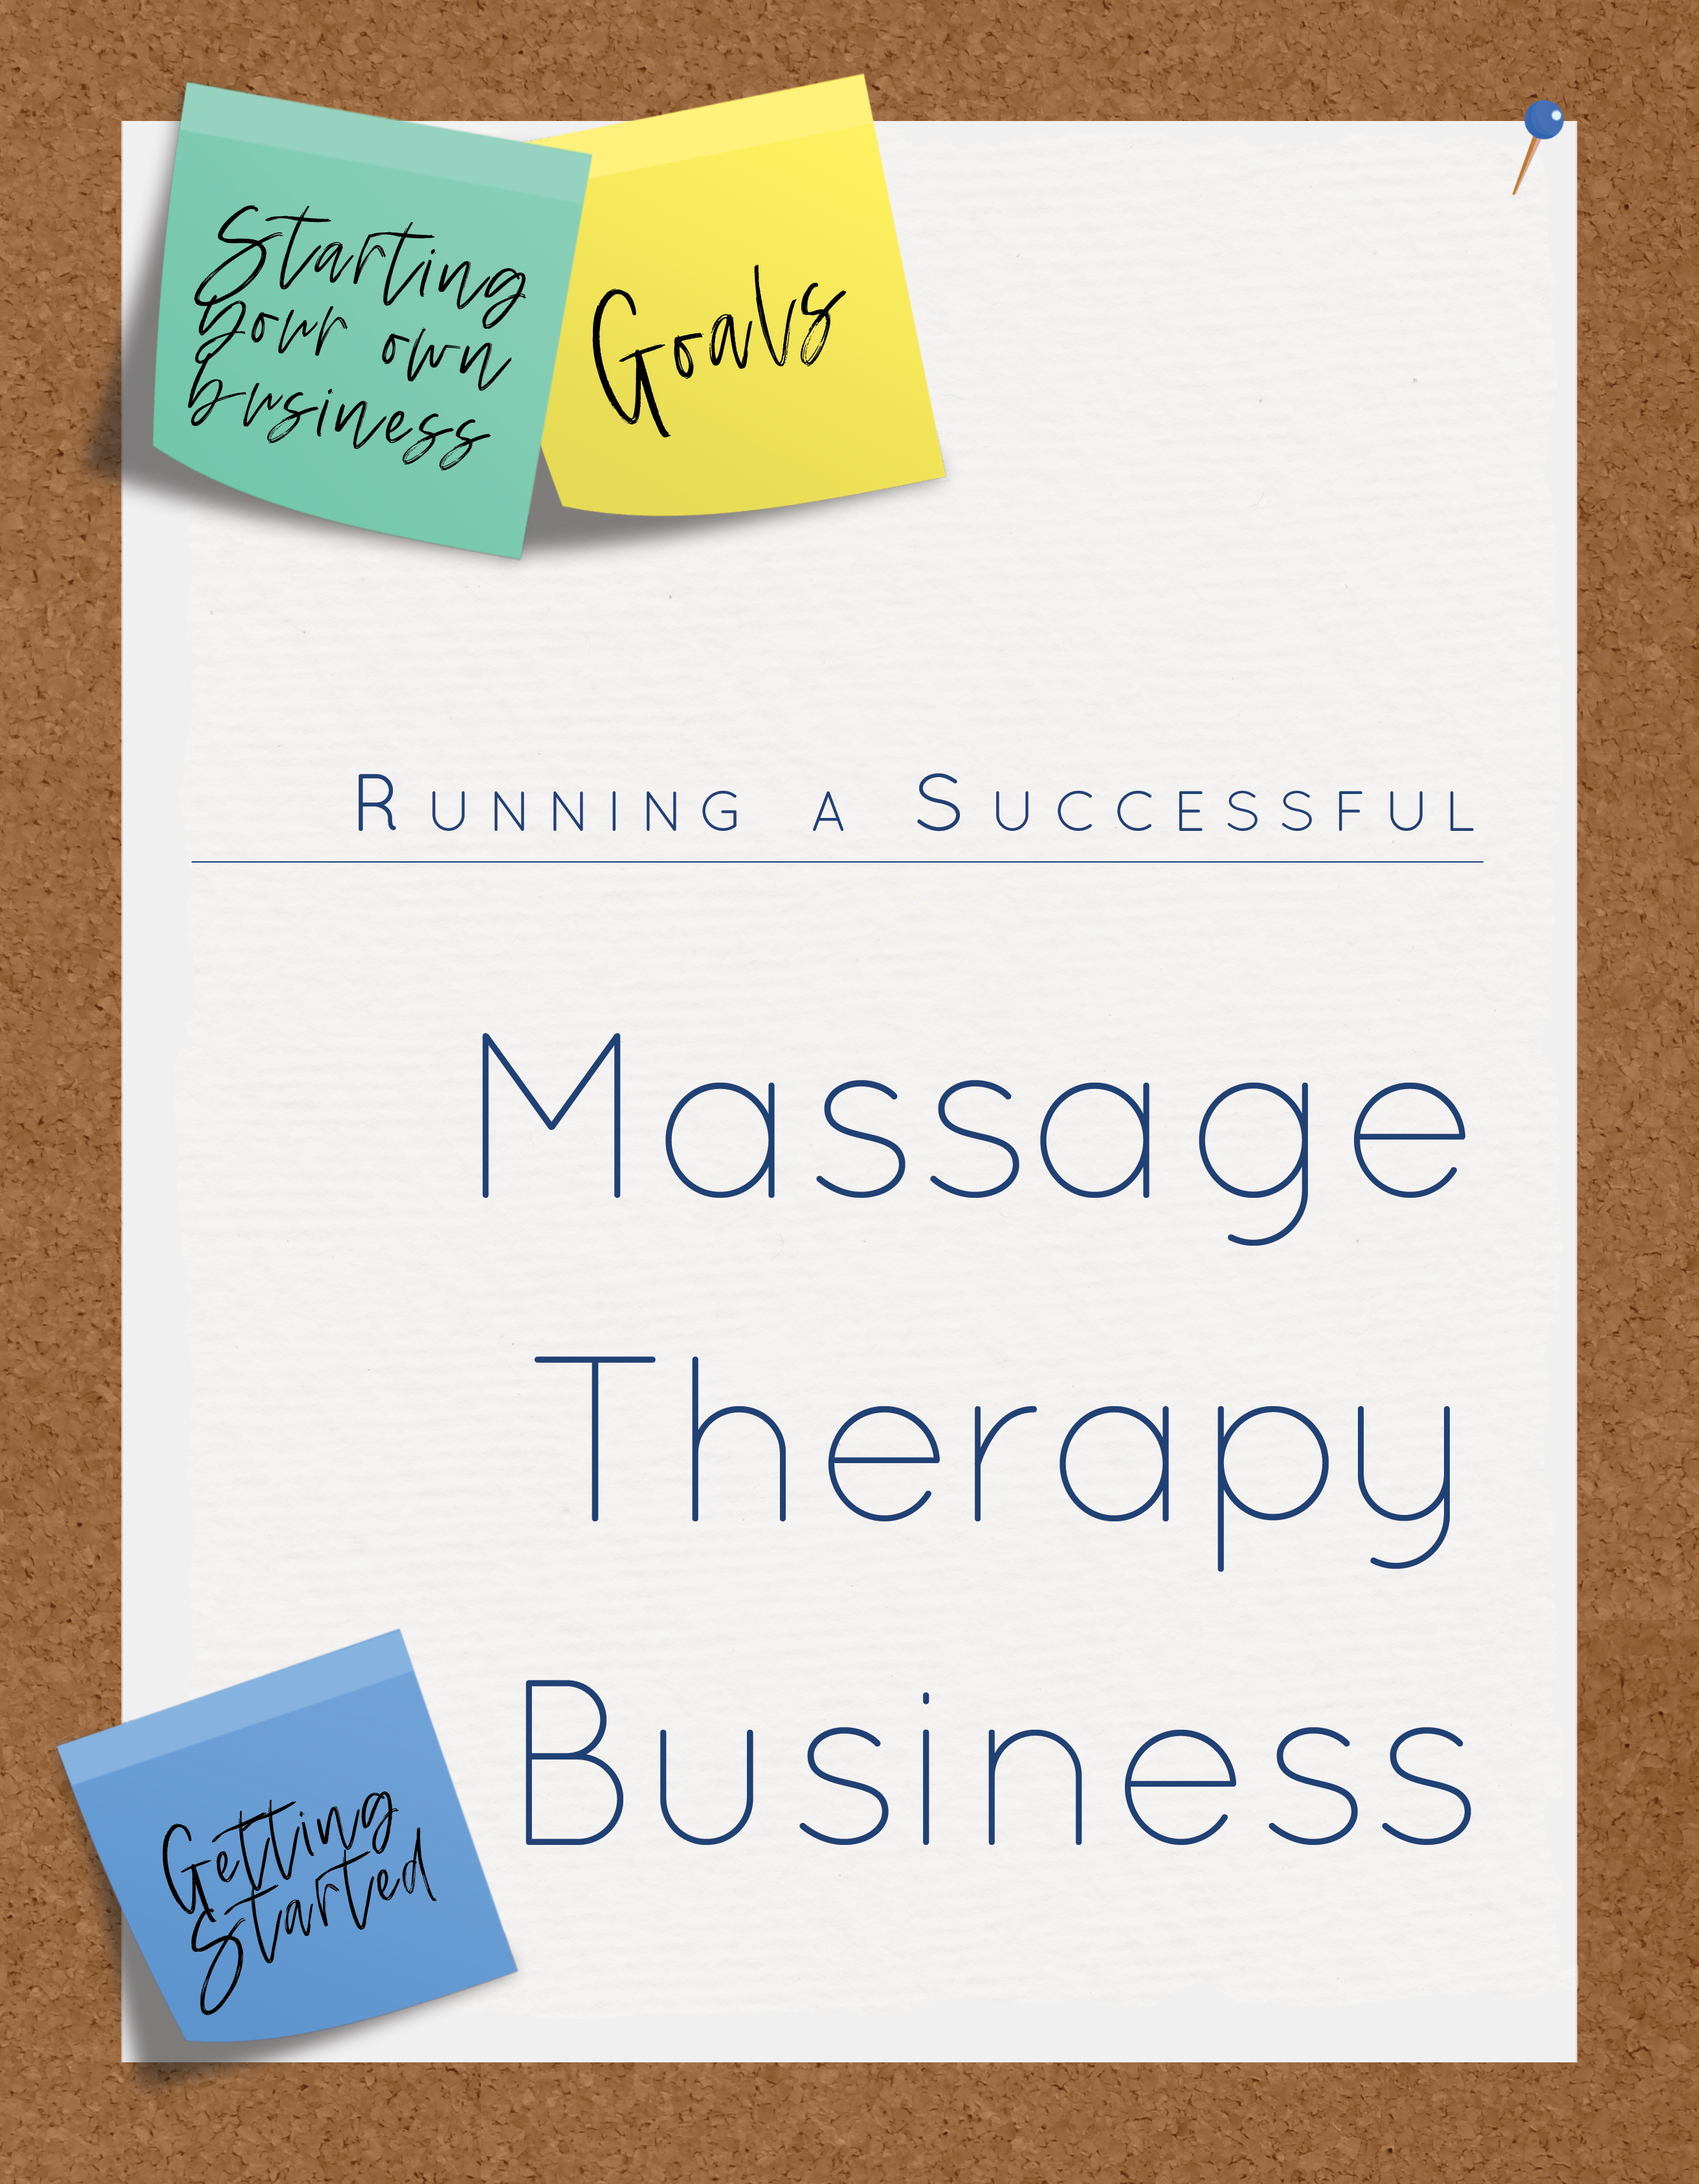 Running a Successful Massage Business Workshop